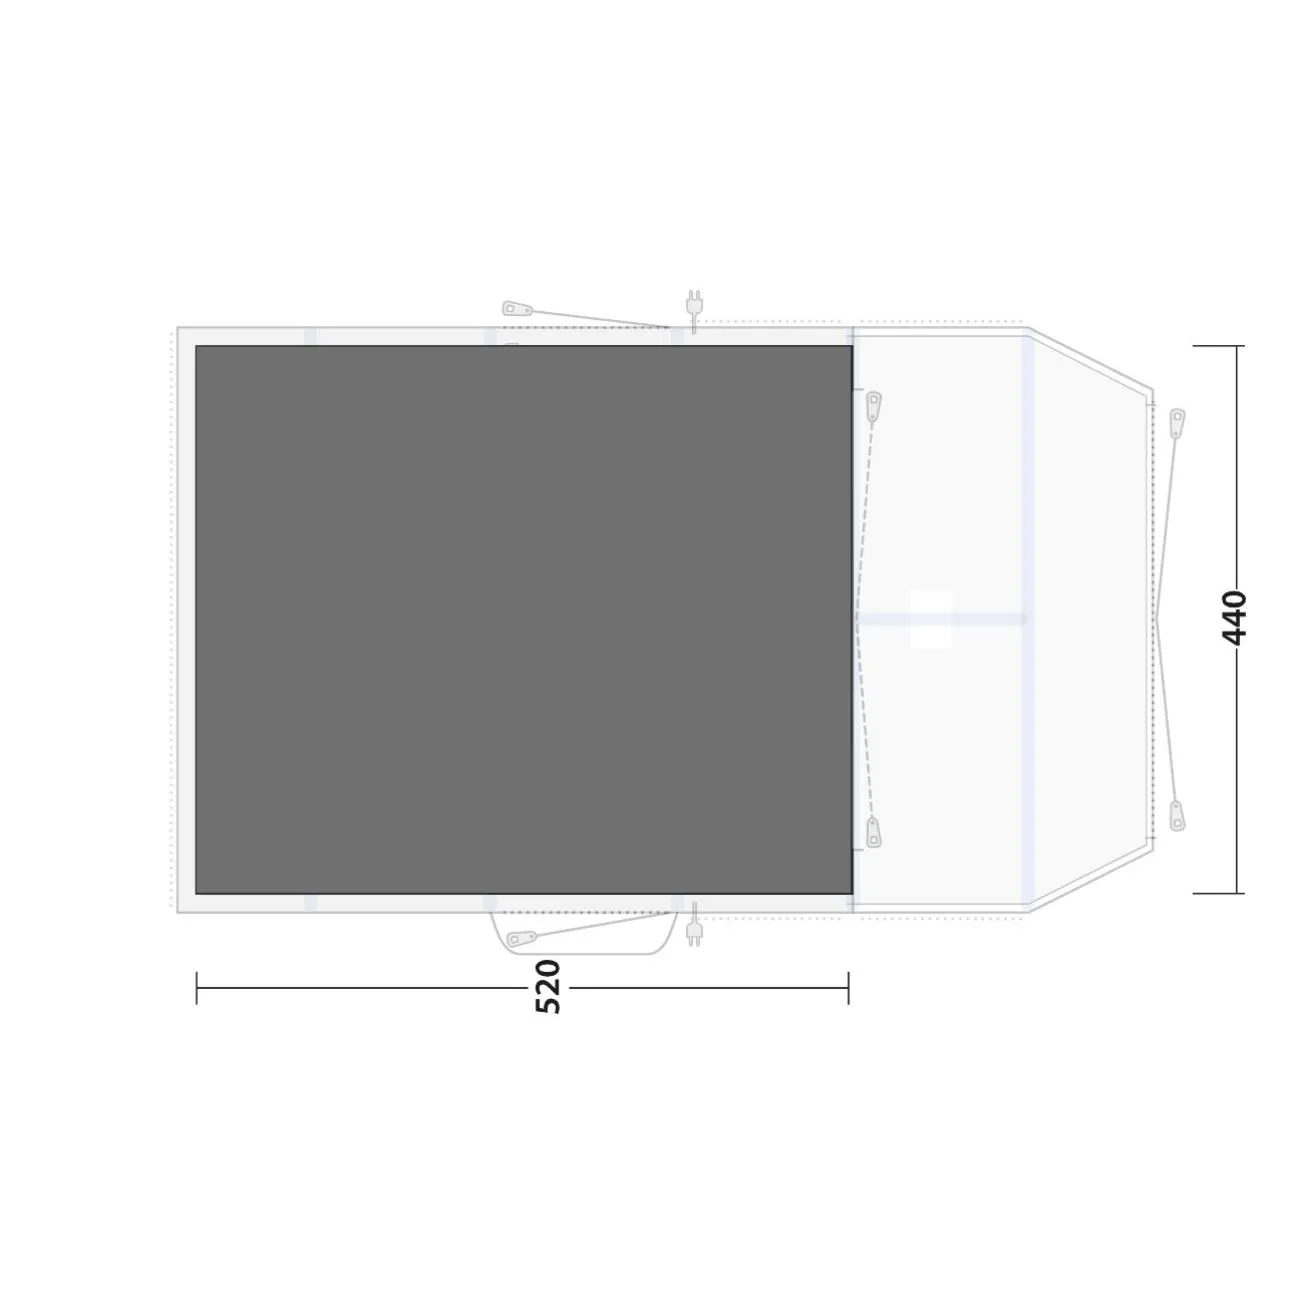 170939_Unterlage Knoxville 7SA_Drawing Floorplan2.jpg